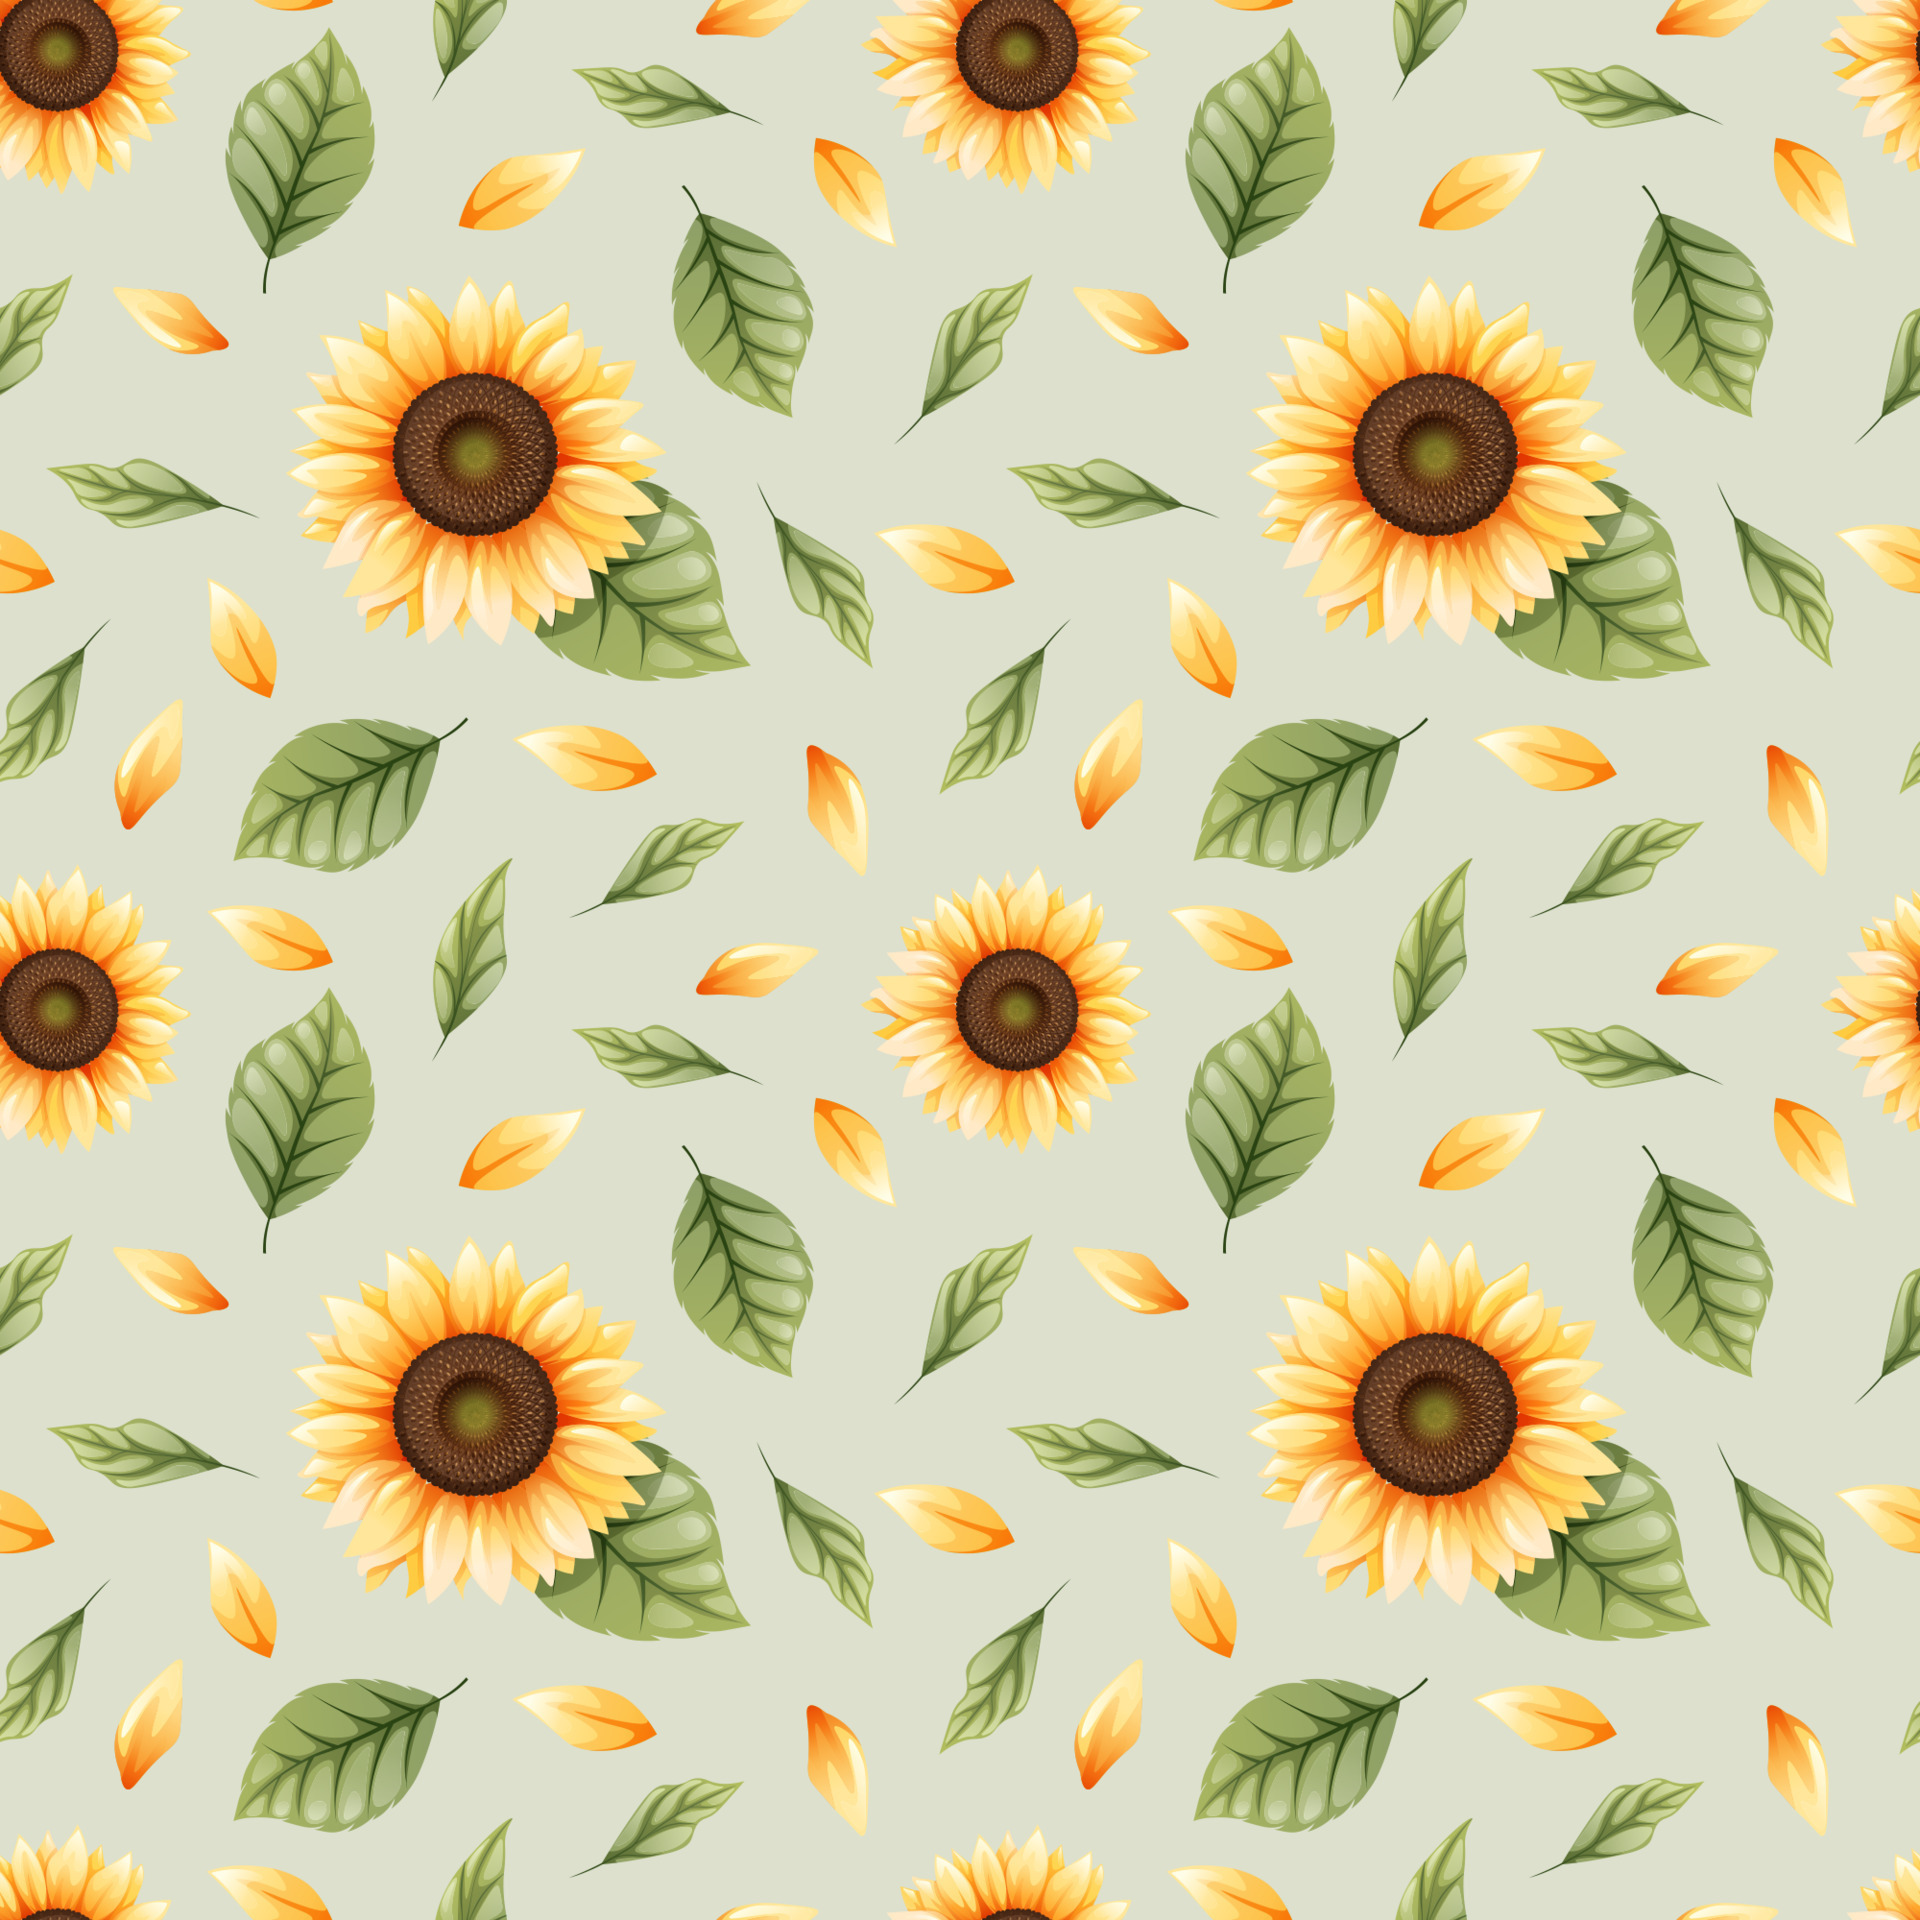 Sunflower Wallpaper Photos Download The BEST Free Sunflower Wallpaper  Stock Photos  HD Images